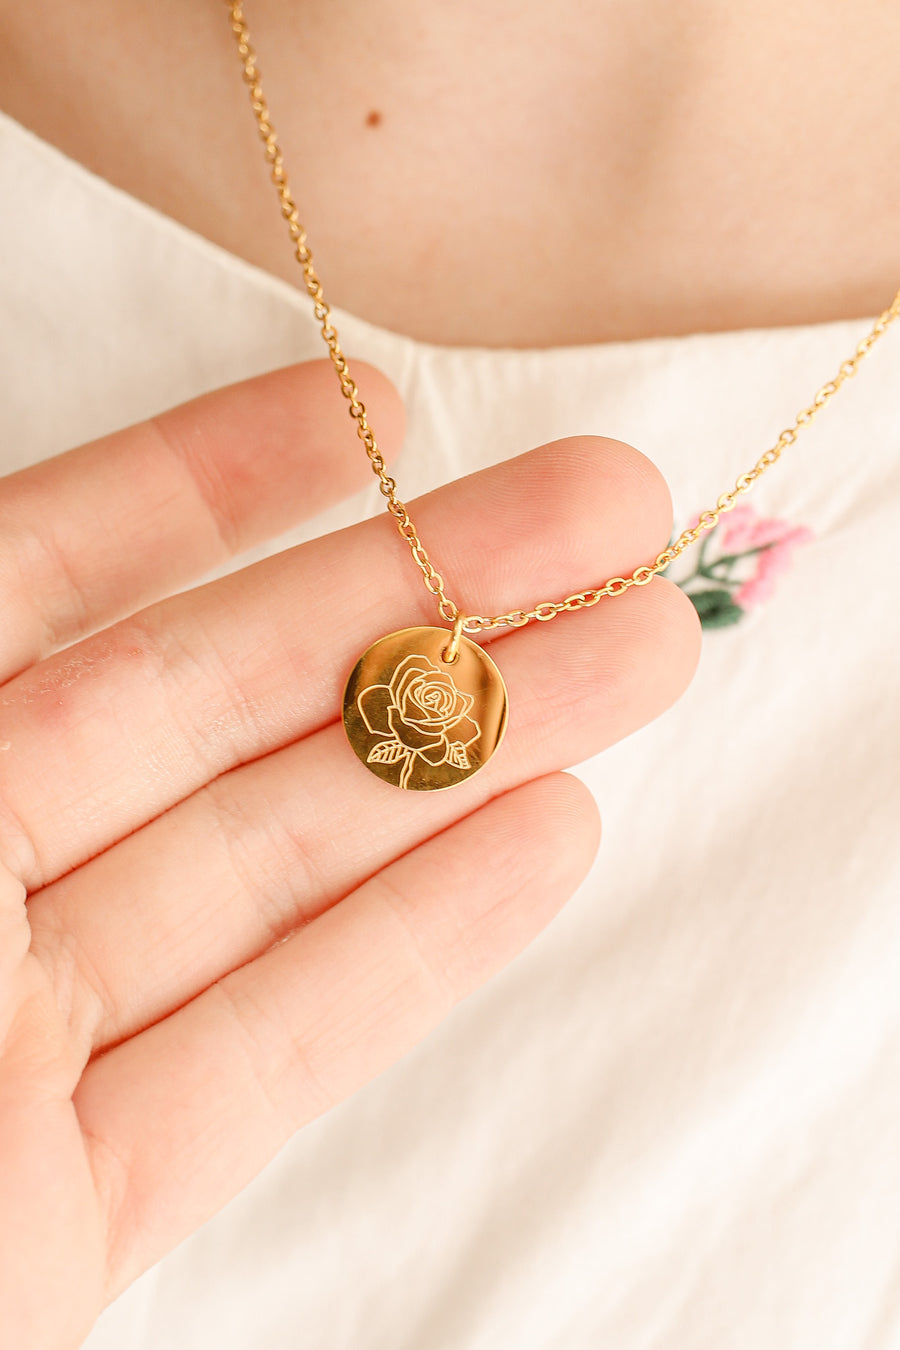 Birth Flower Necklace in Gold